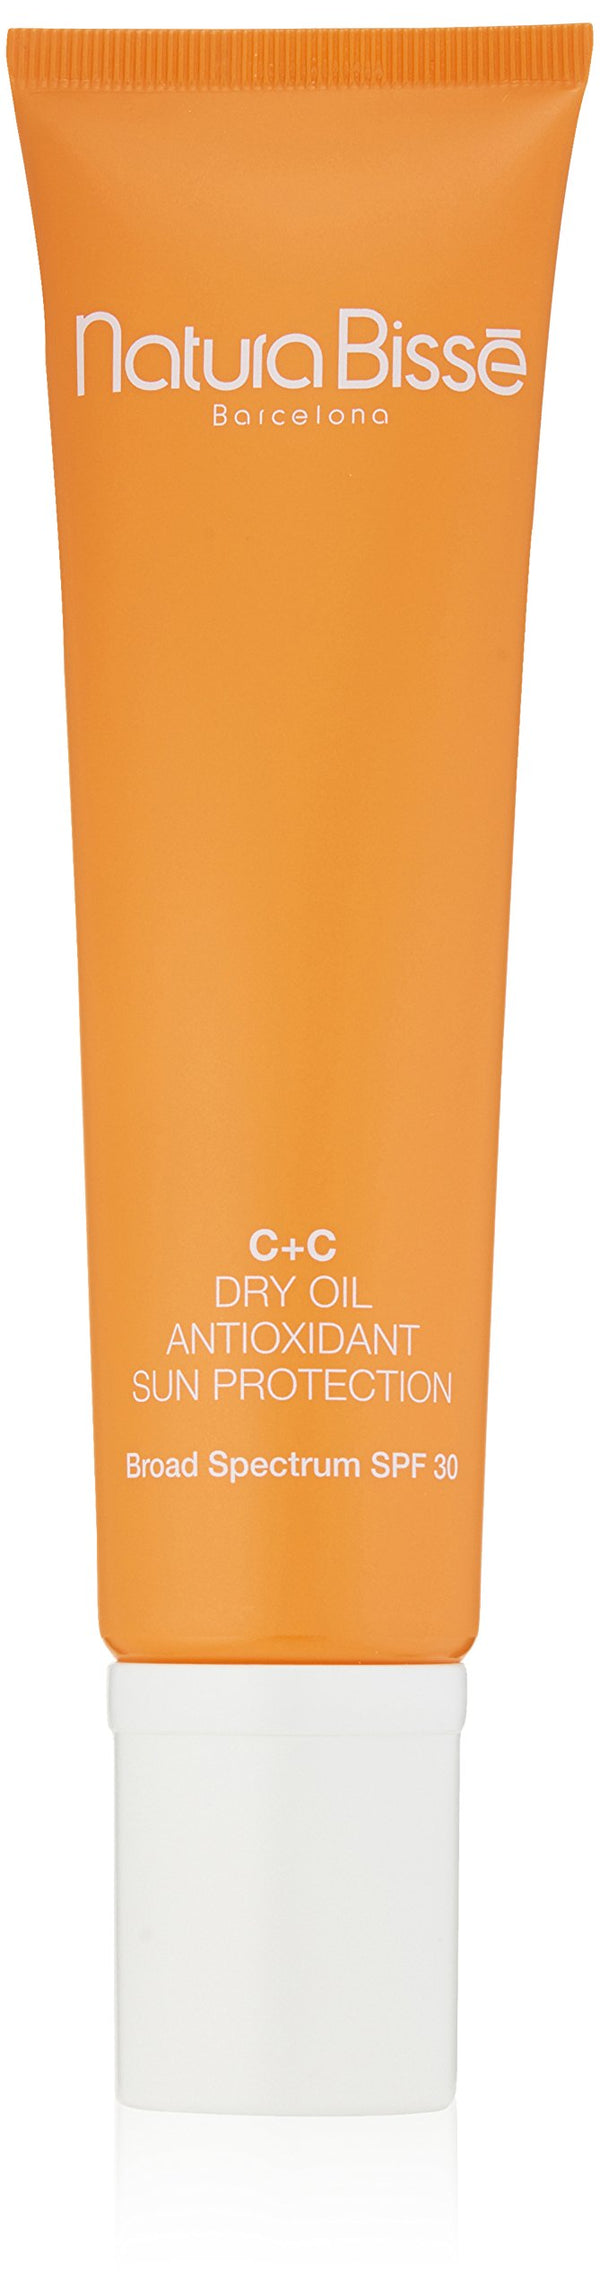 Natura Bissé C+C Dry Oil Antioxidant Sun Protection, 100 ml